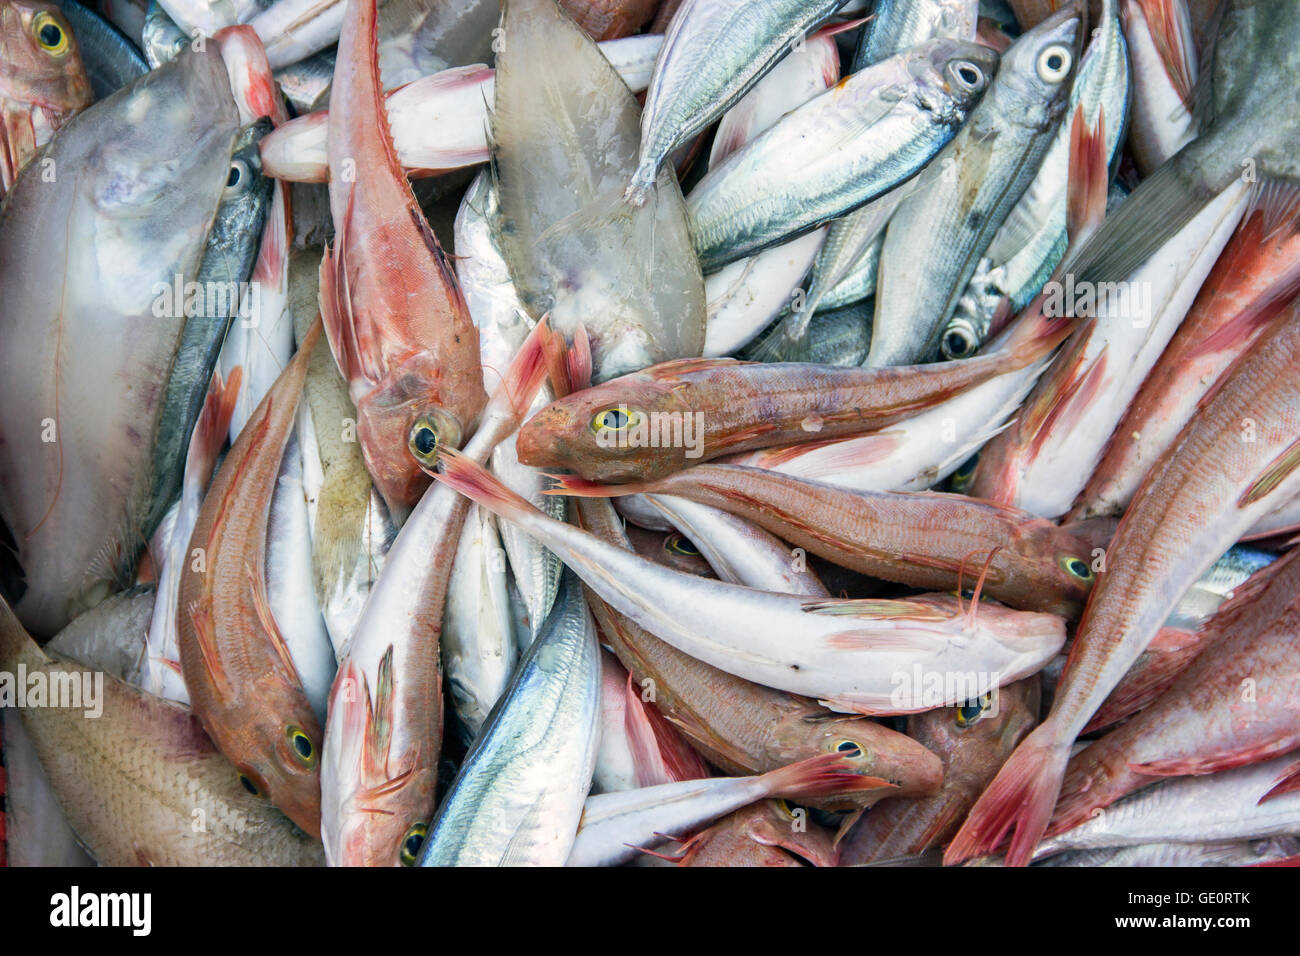 Budva harbor, Montenegro - Several different types of sea fish captured in the Adriatic Sea Stock Photo